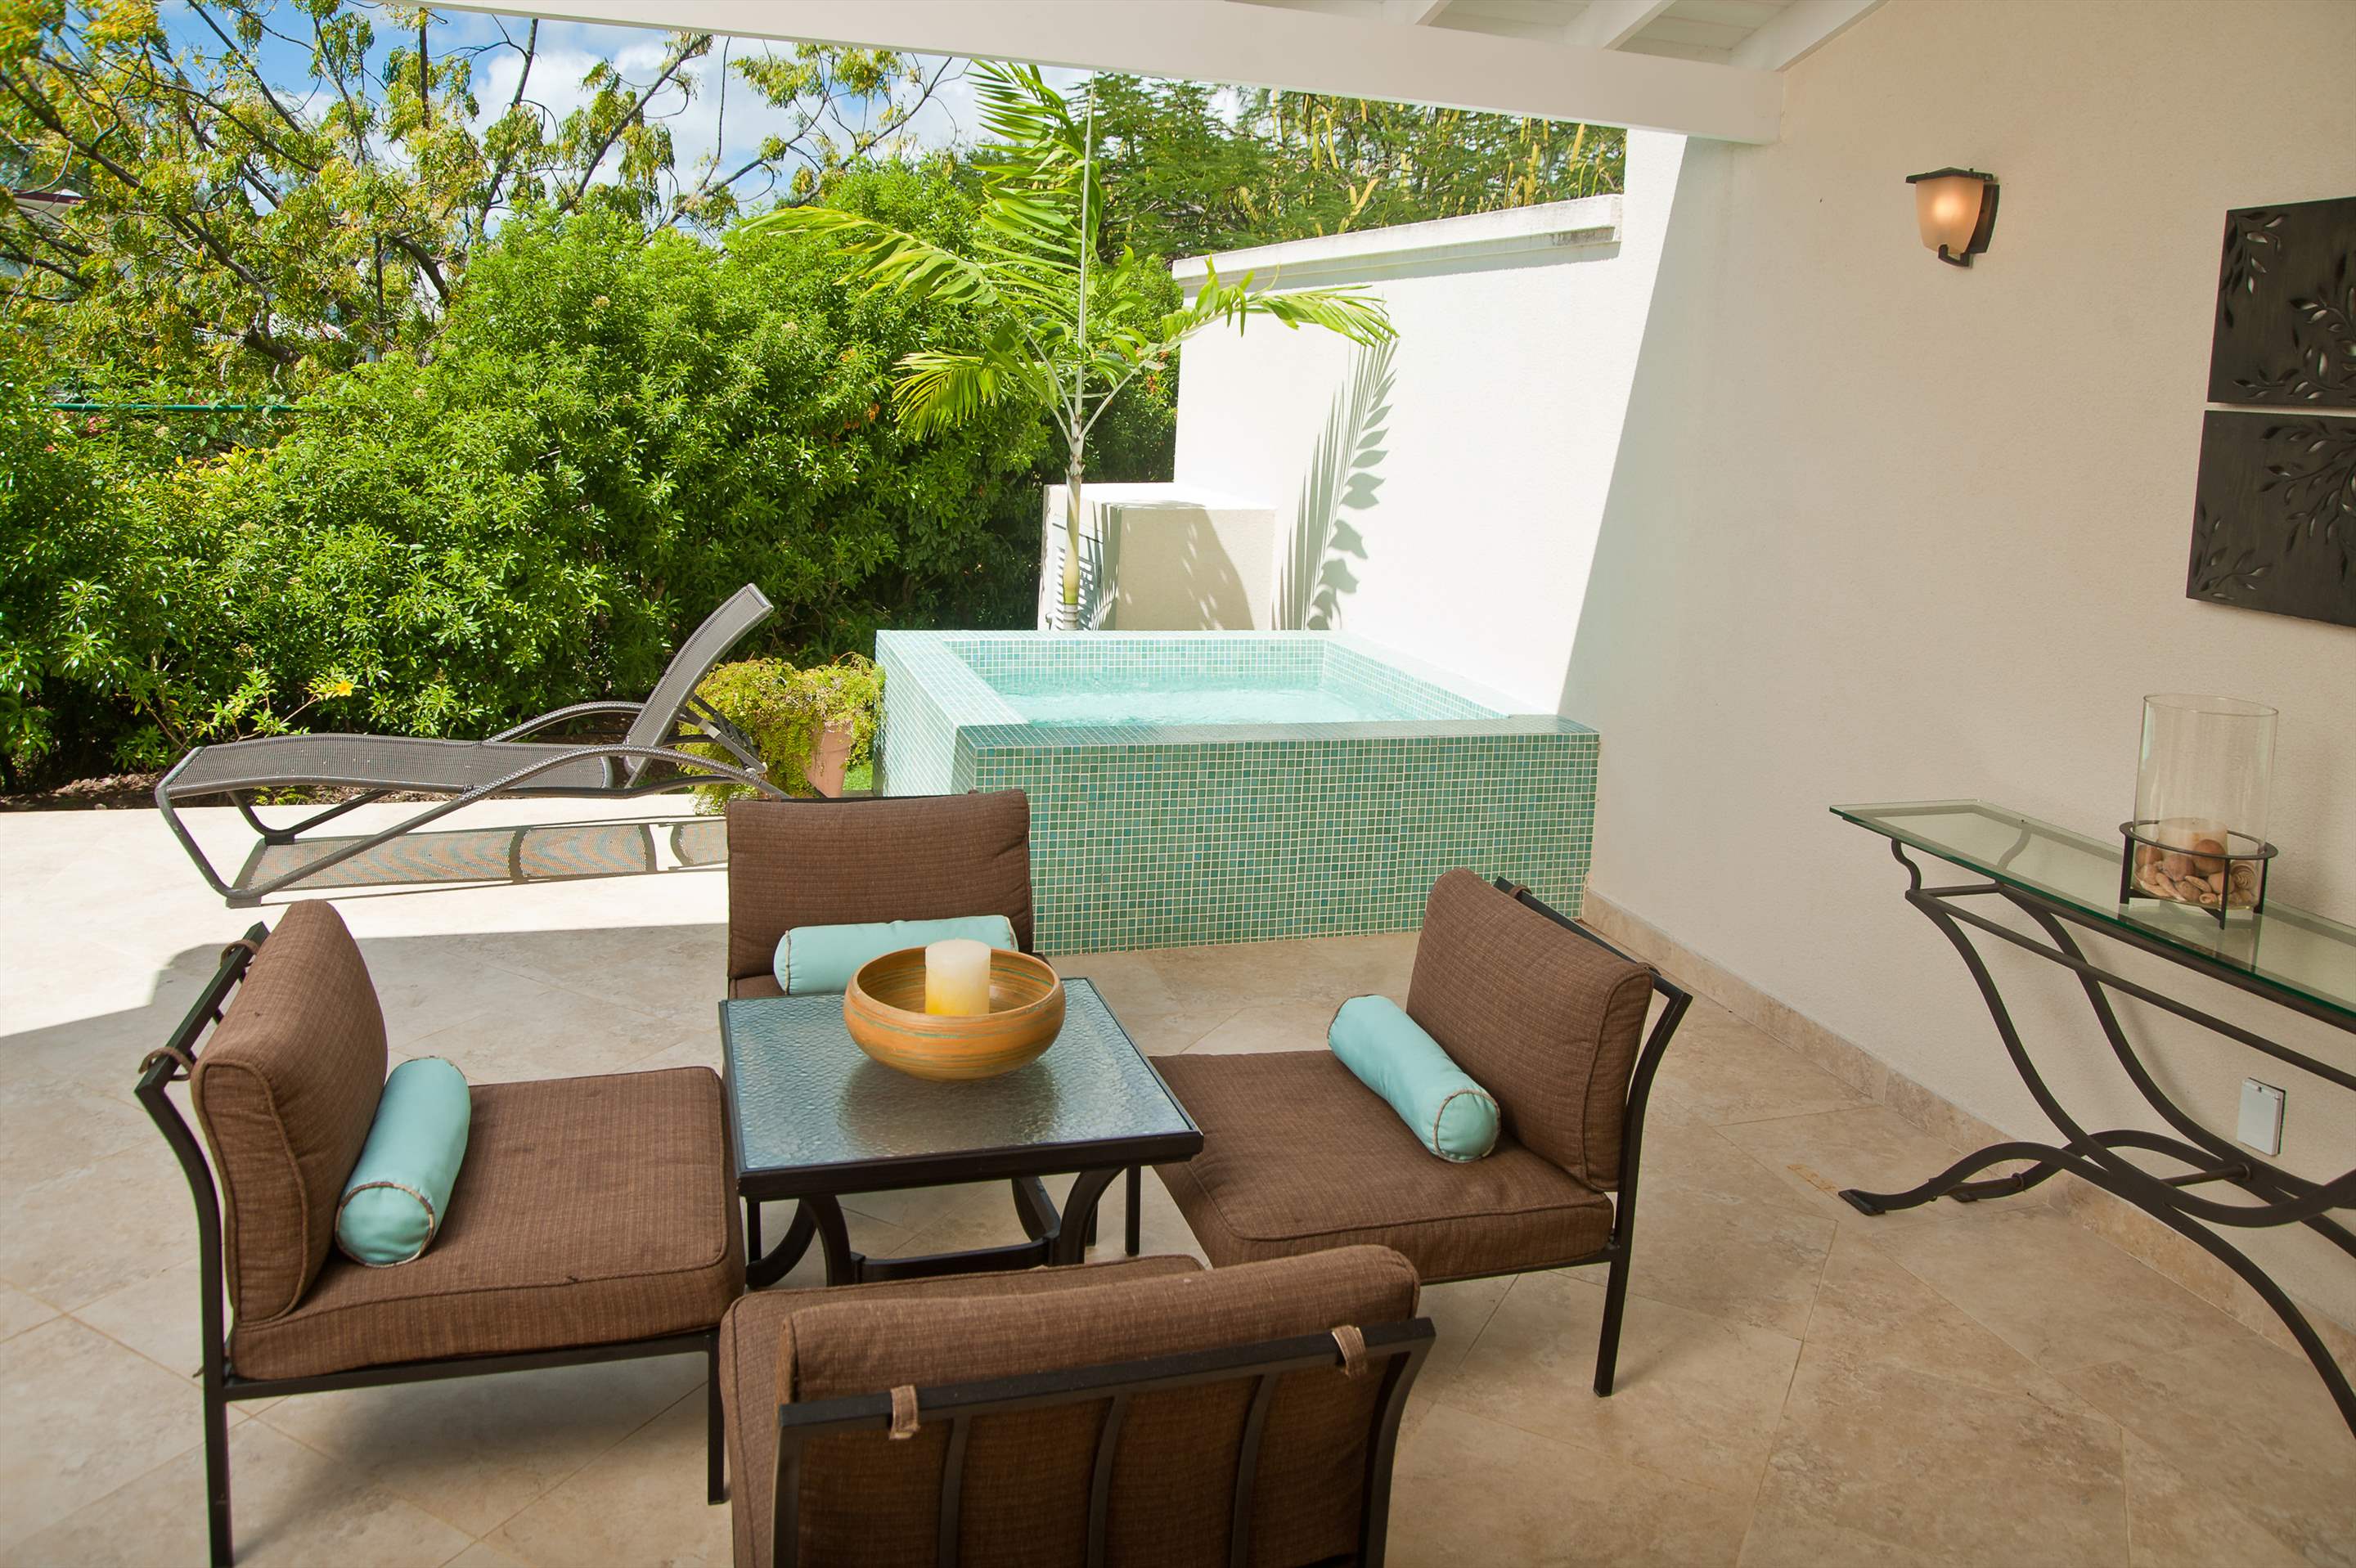 Palisades 6A, Freights Bay, 3 bedroom villa in St. Lawrence Gap & South Coast, Barbados